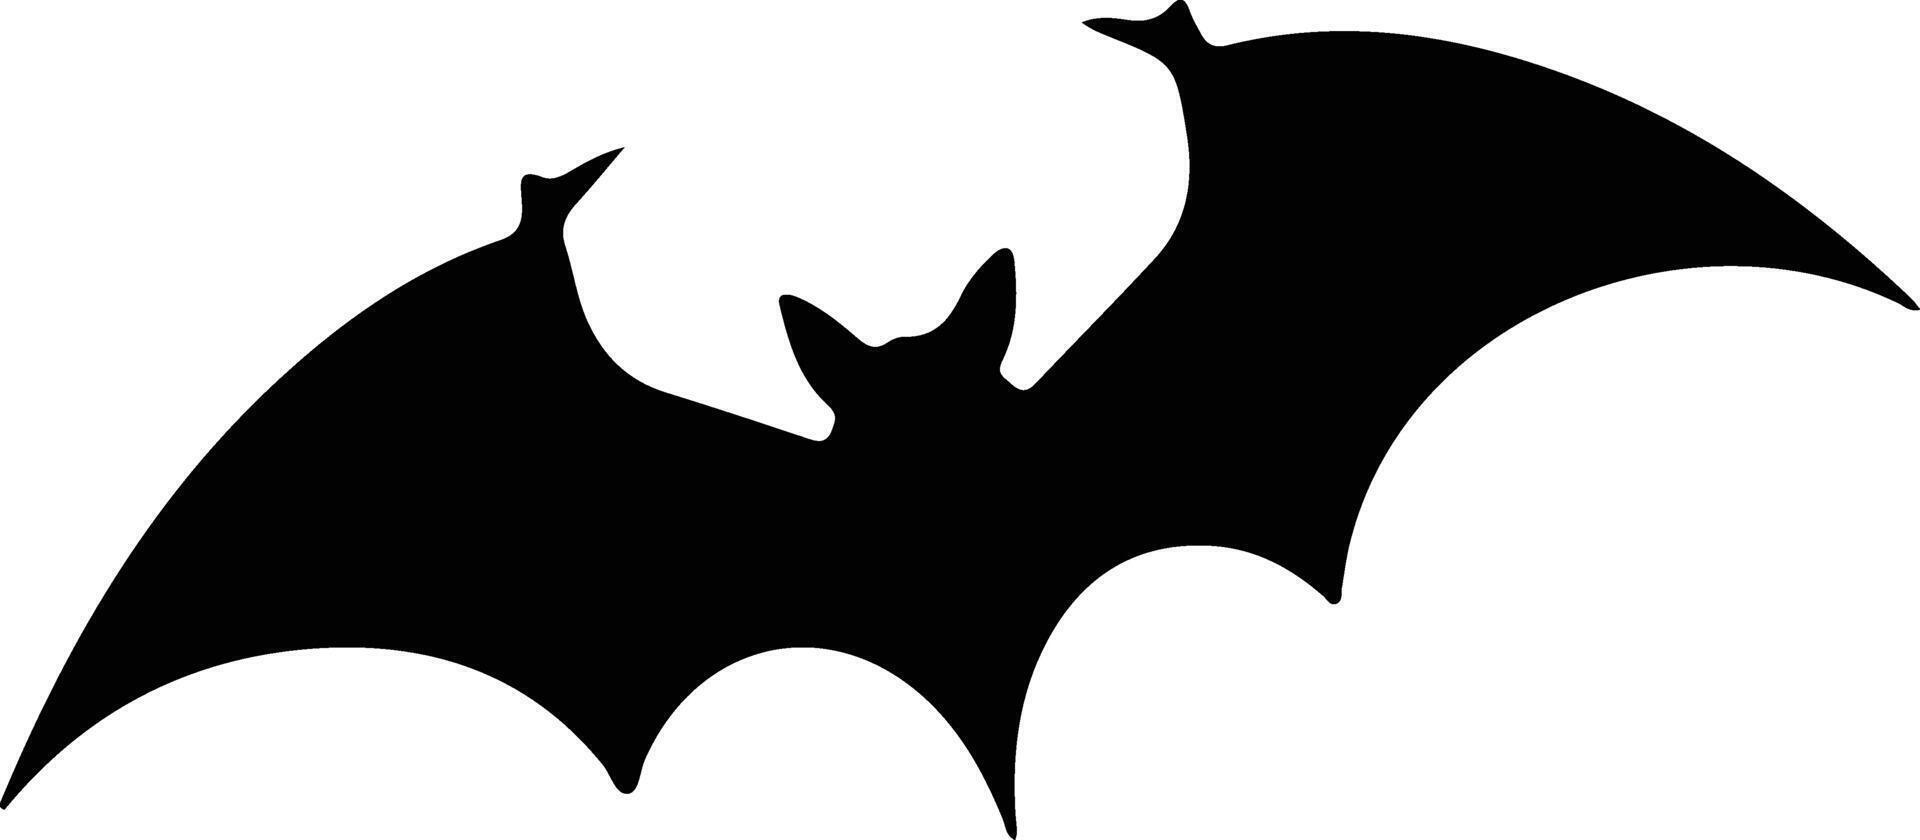 fruit bat black silhouette vector